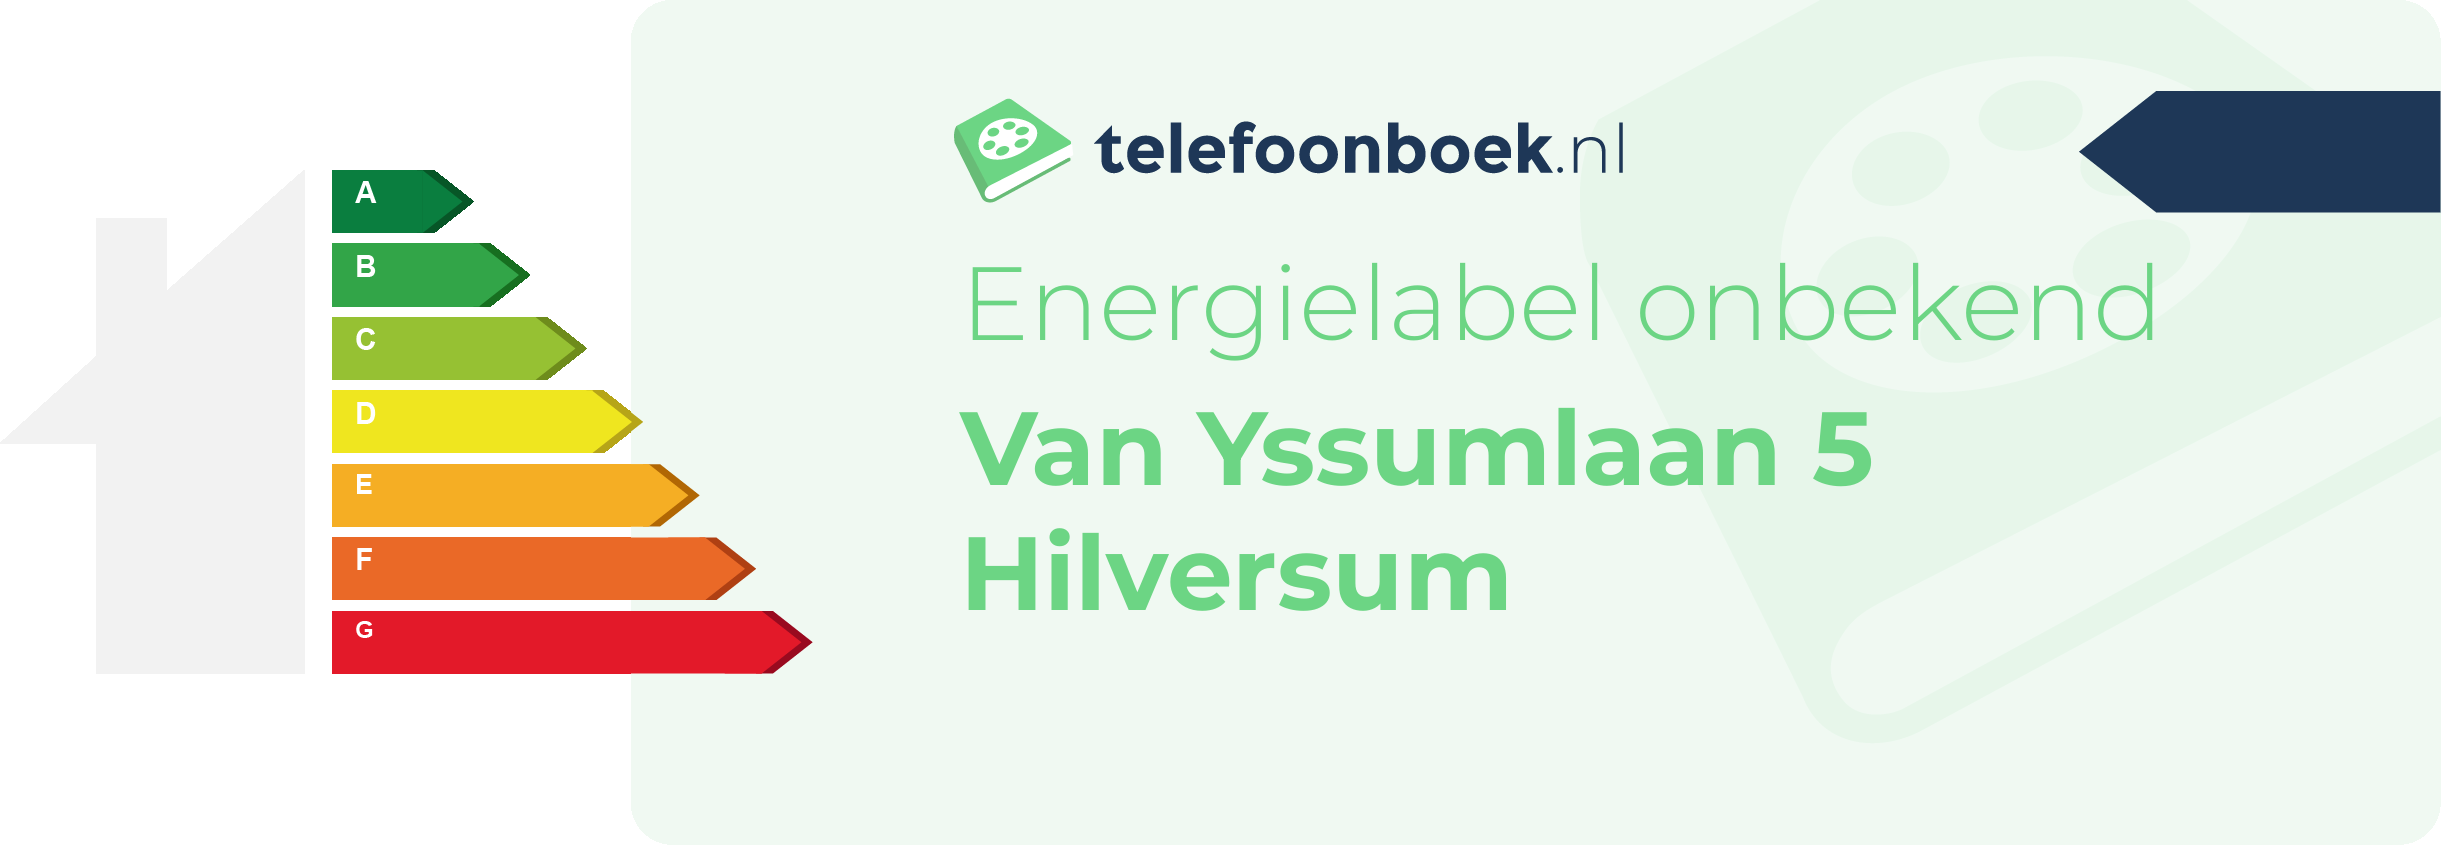 Energielabel Van Yssumlaan 5 Hilversum